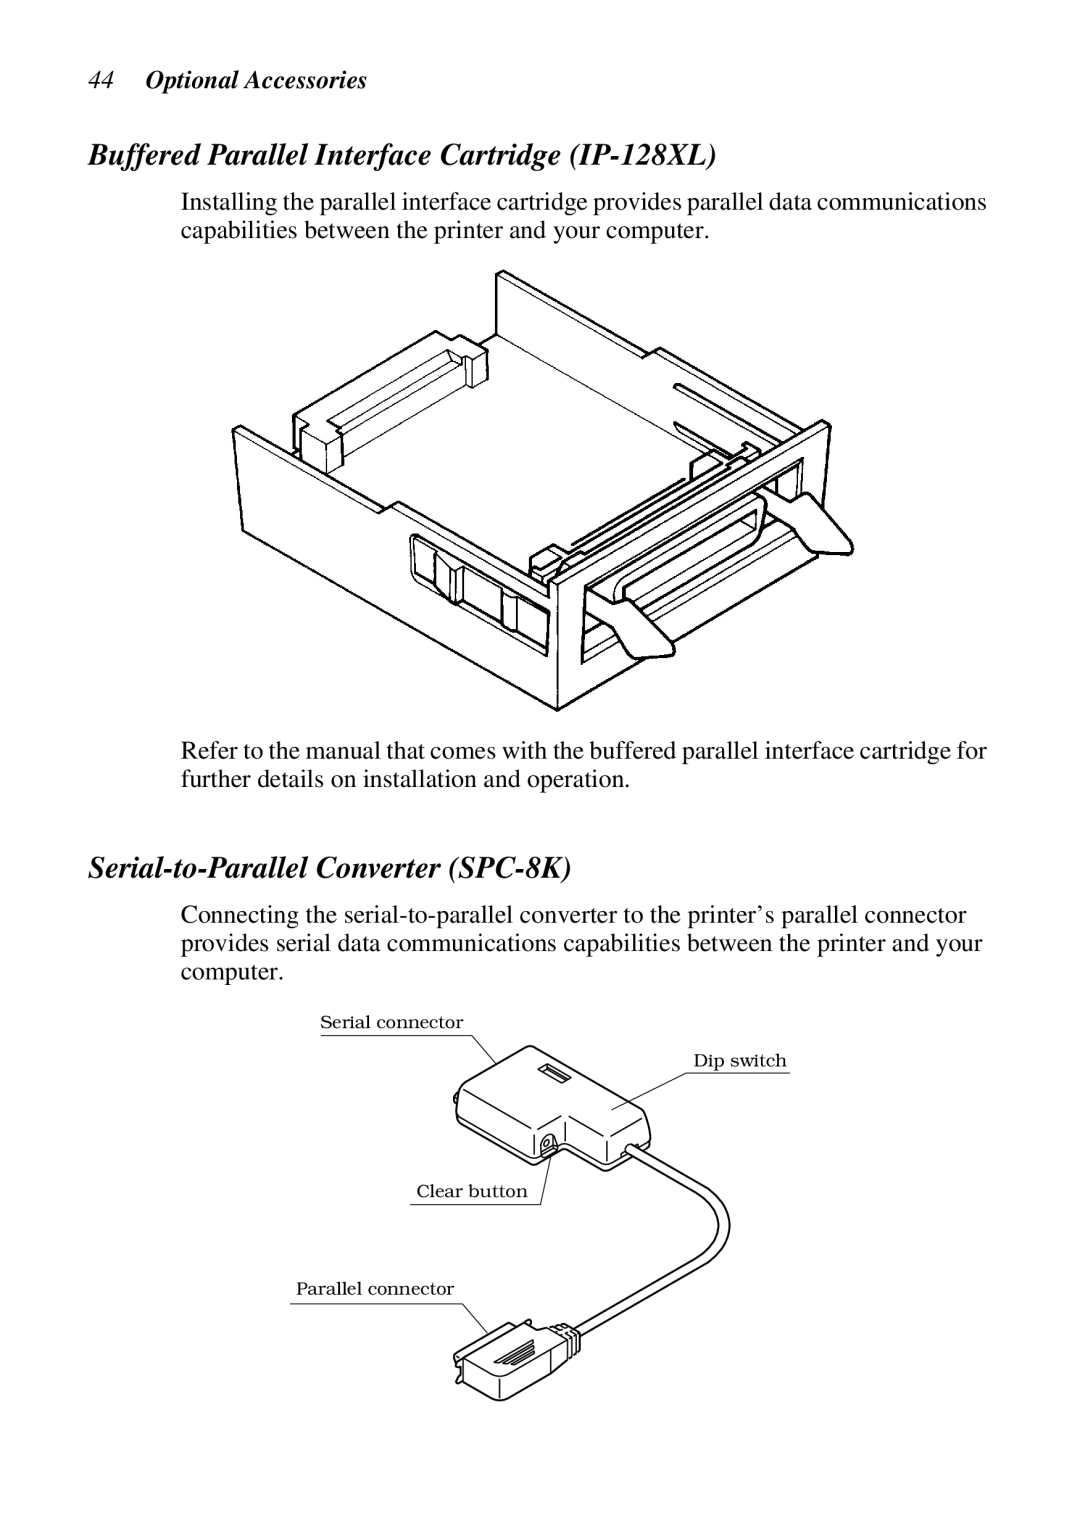 Star Micronics XB24-250 II user manual Buffered Parallel Interface Cartridge IP-128XL, Serial-to-Parallel Converter SPC-8K 